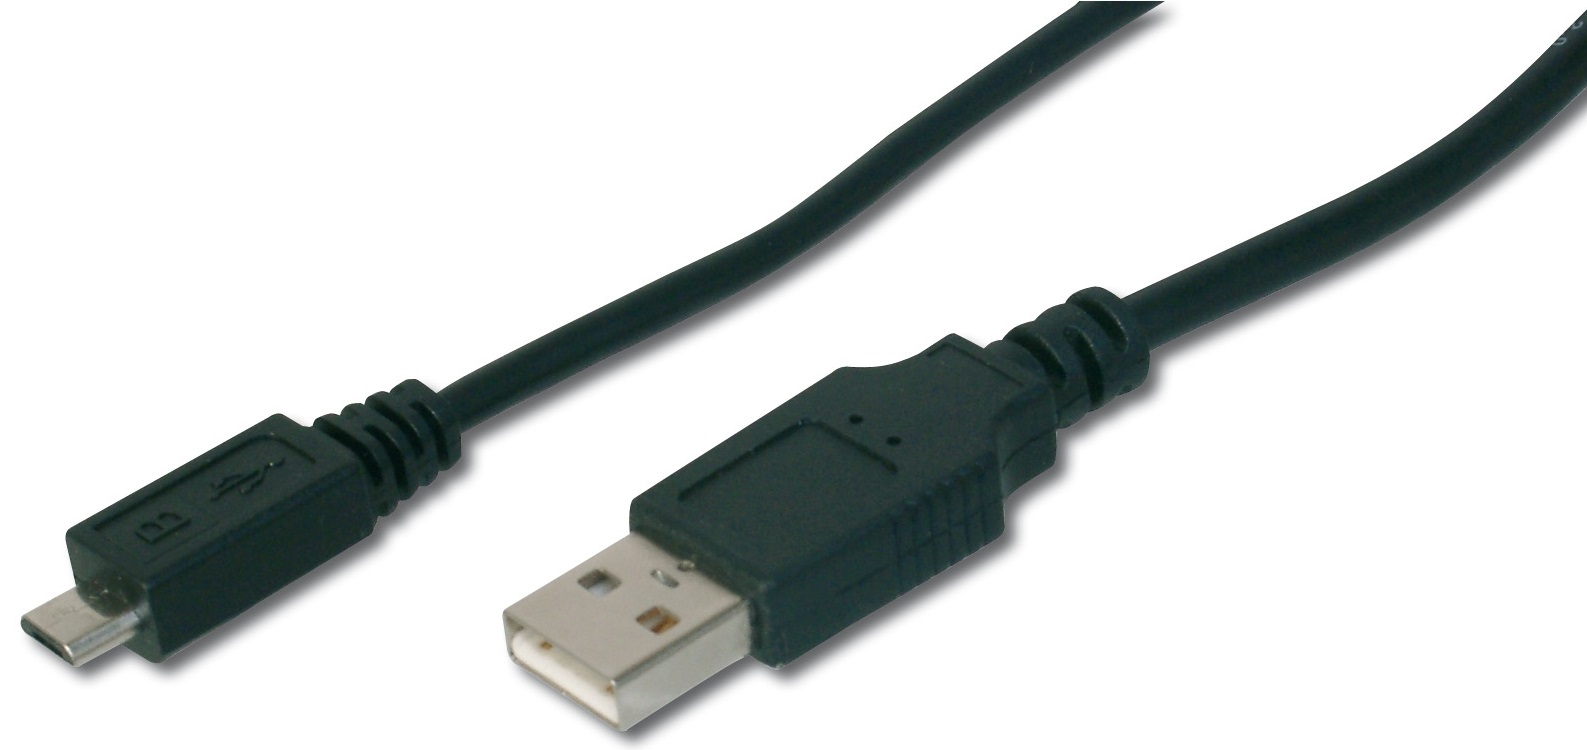 Кабель ASSMANN USB 2.0 (AM/microB) 1.8m, black (AK-300127-018-S) в Киеве